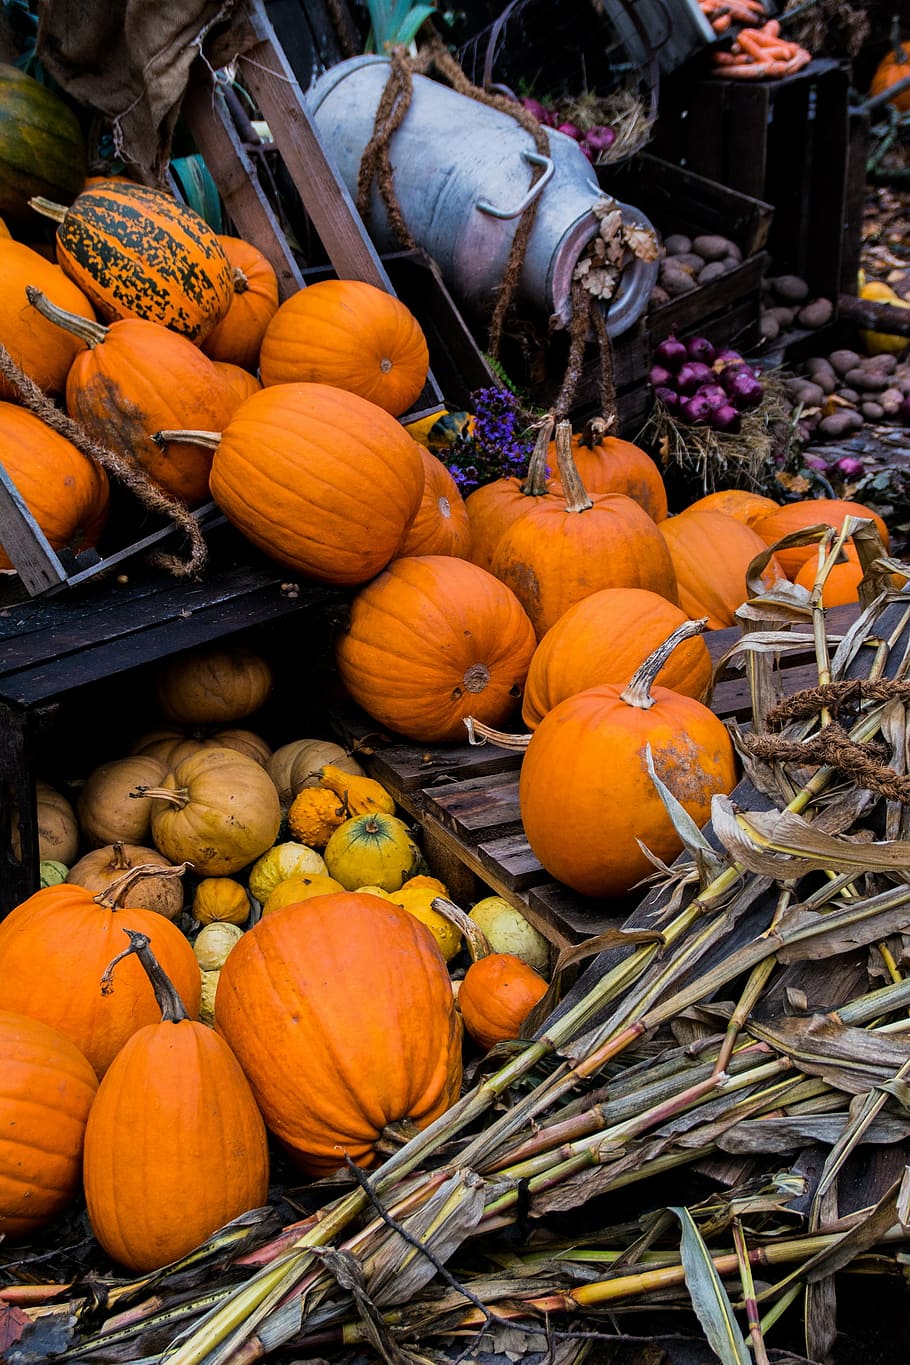 halloween, autumn, pumpkin, vegetable, orange Color, agriculture